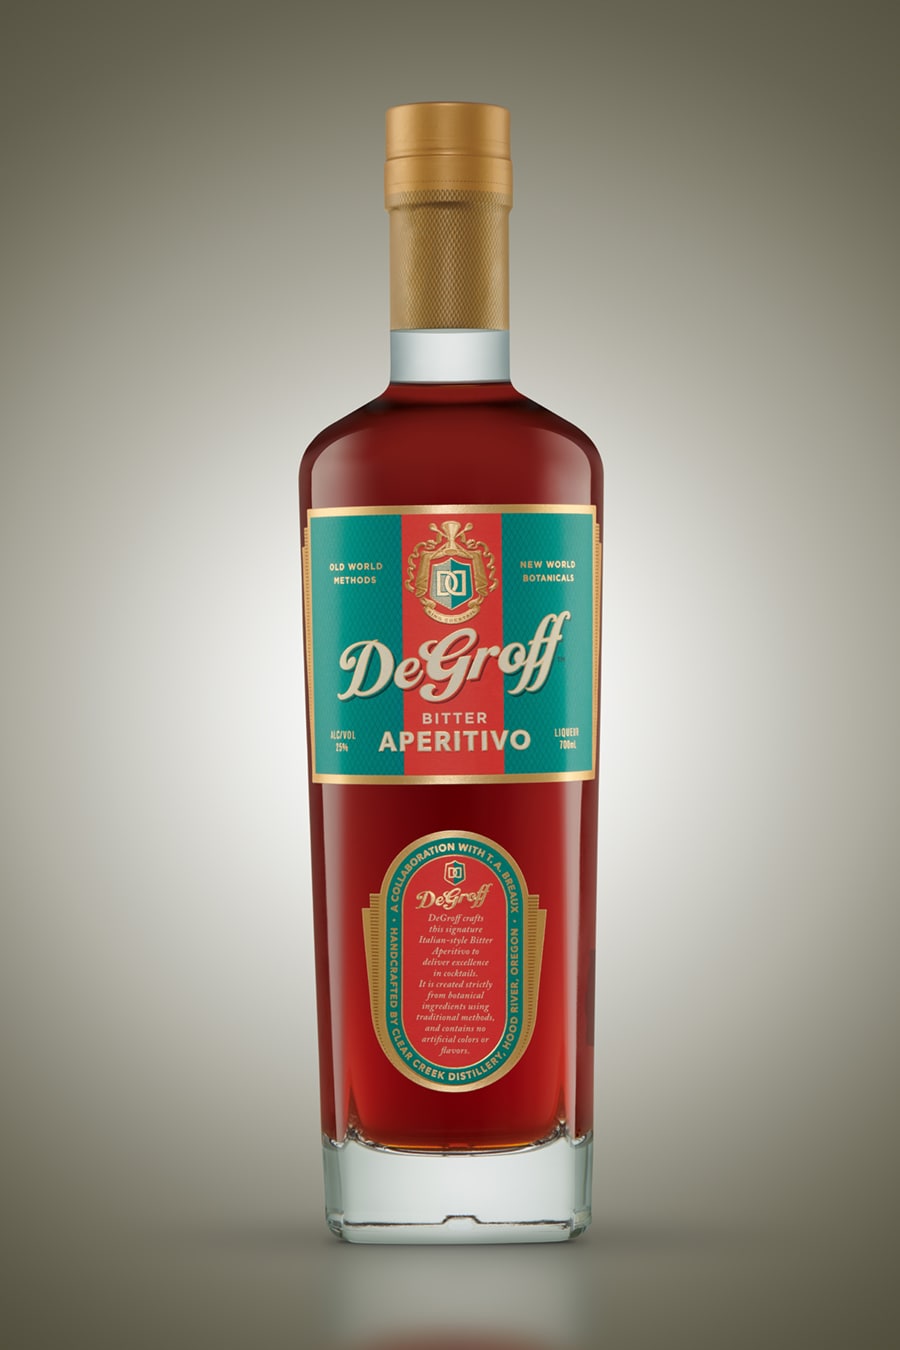 DeGroff Aperitivo bottle design